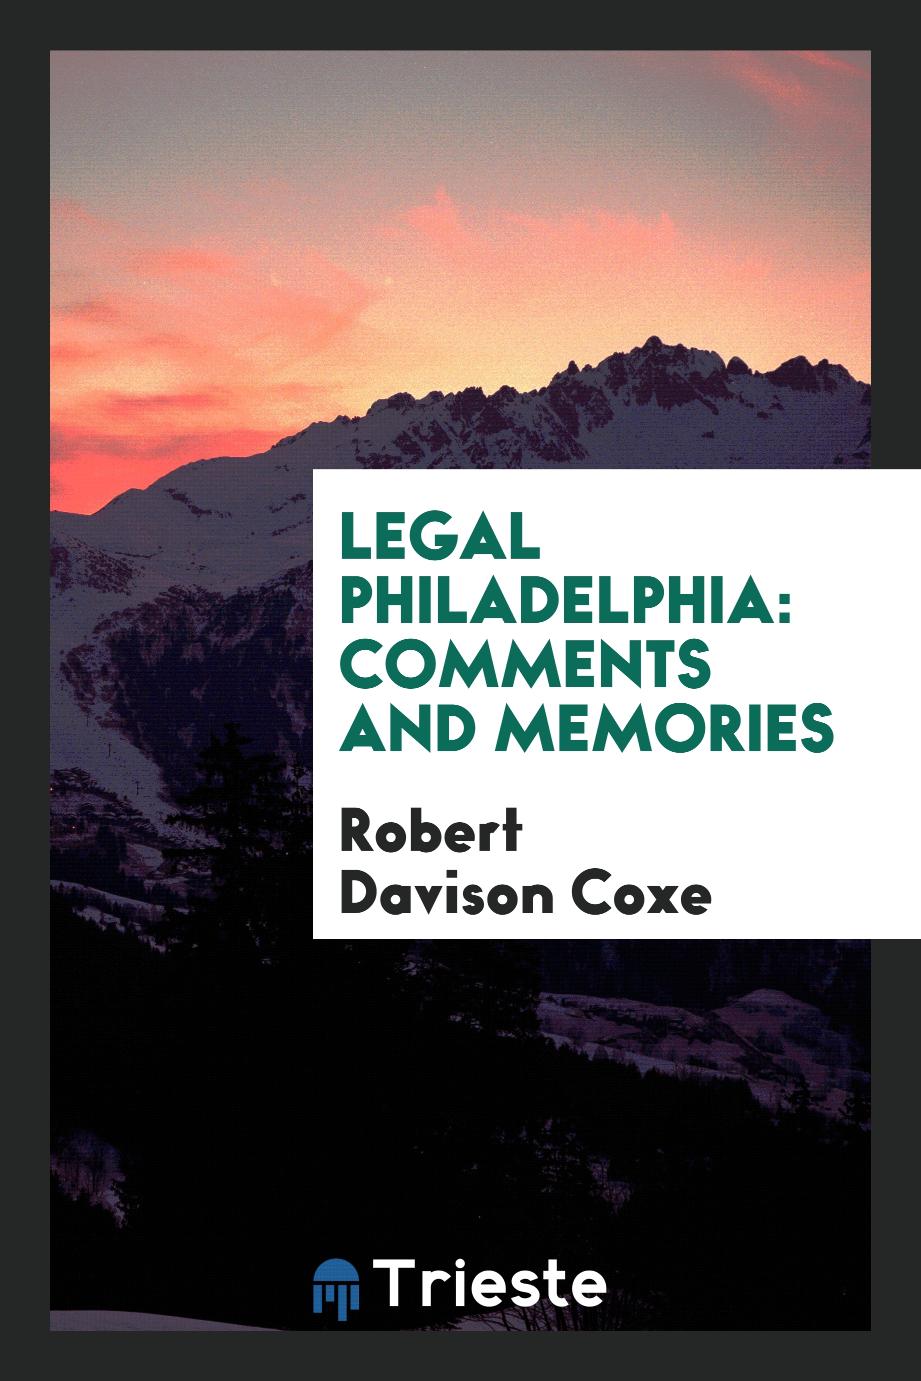 Legal Philadelphia: comments and memories